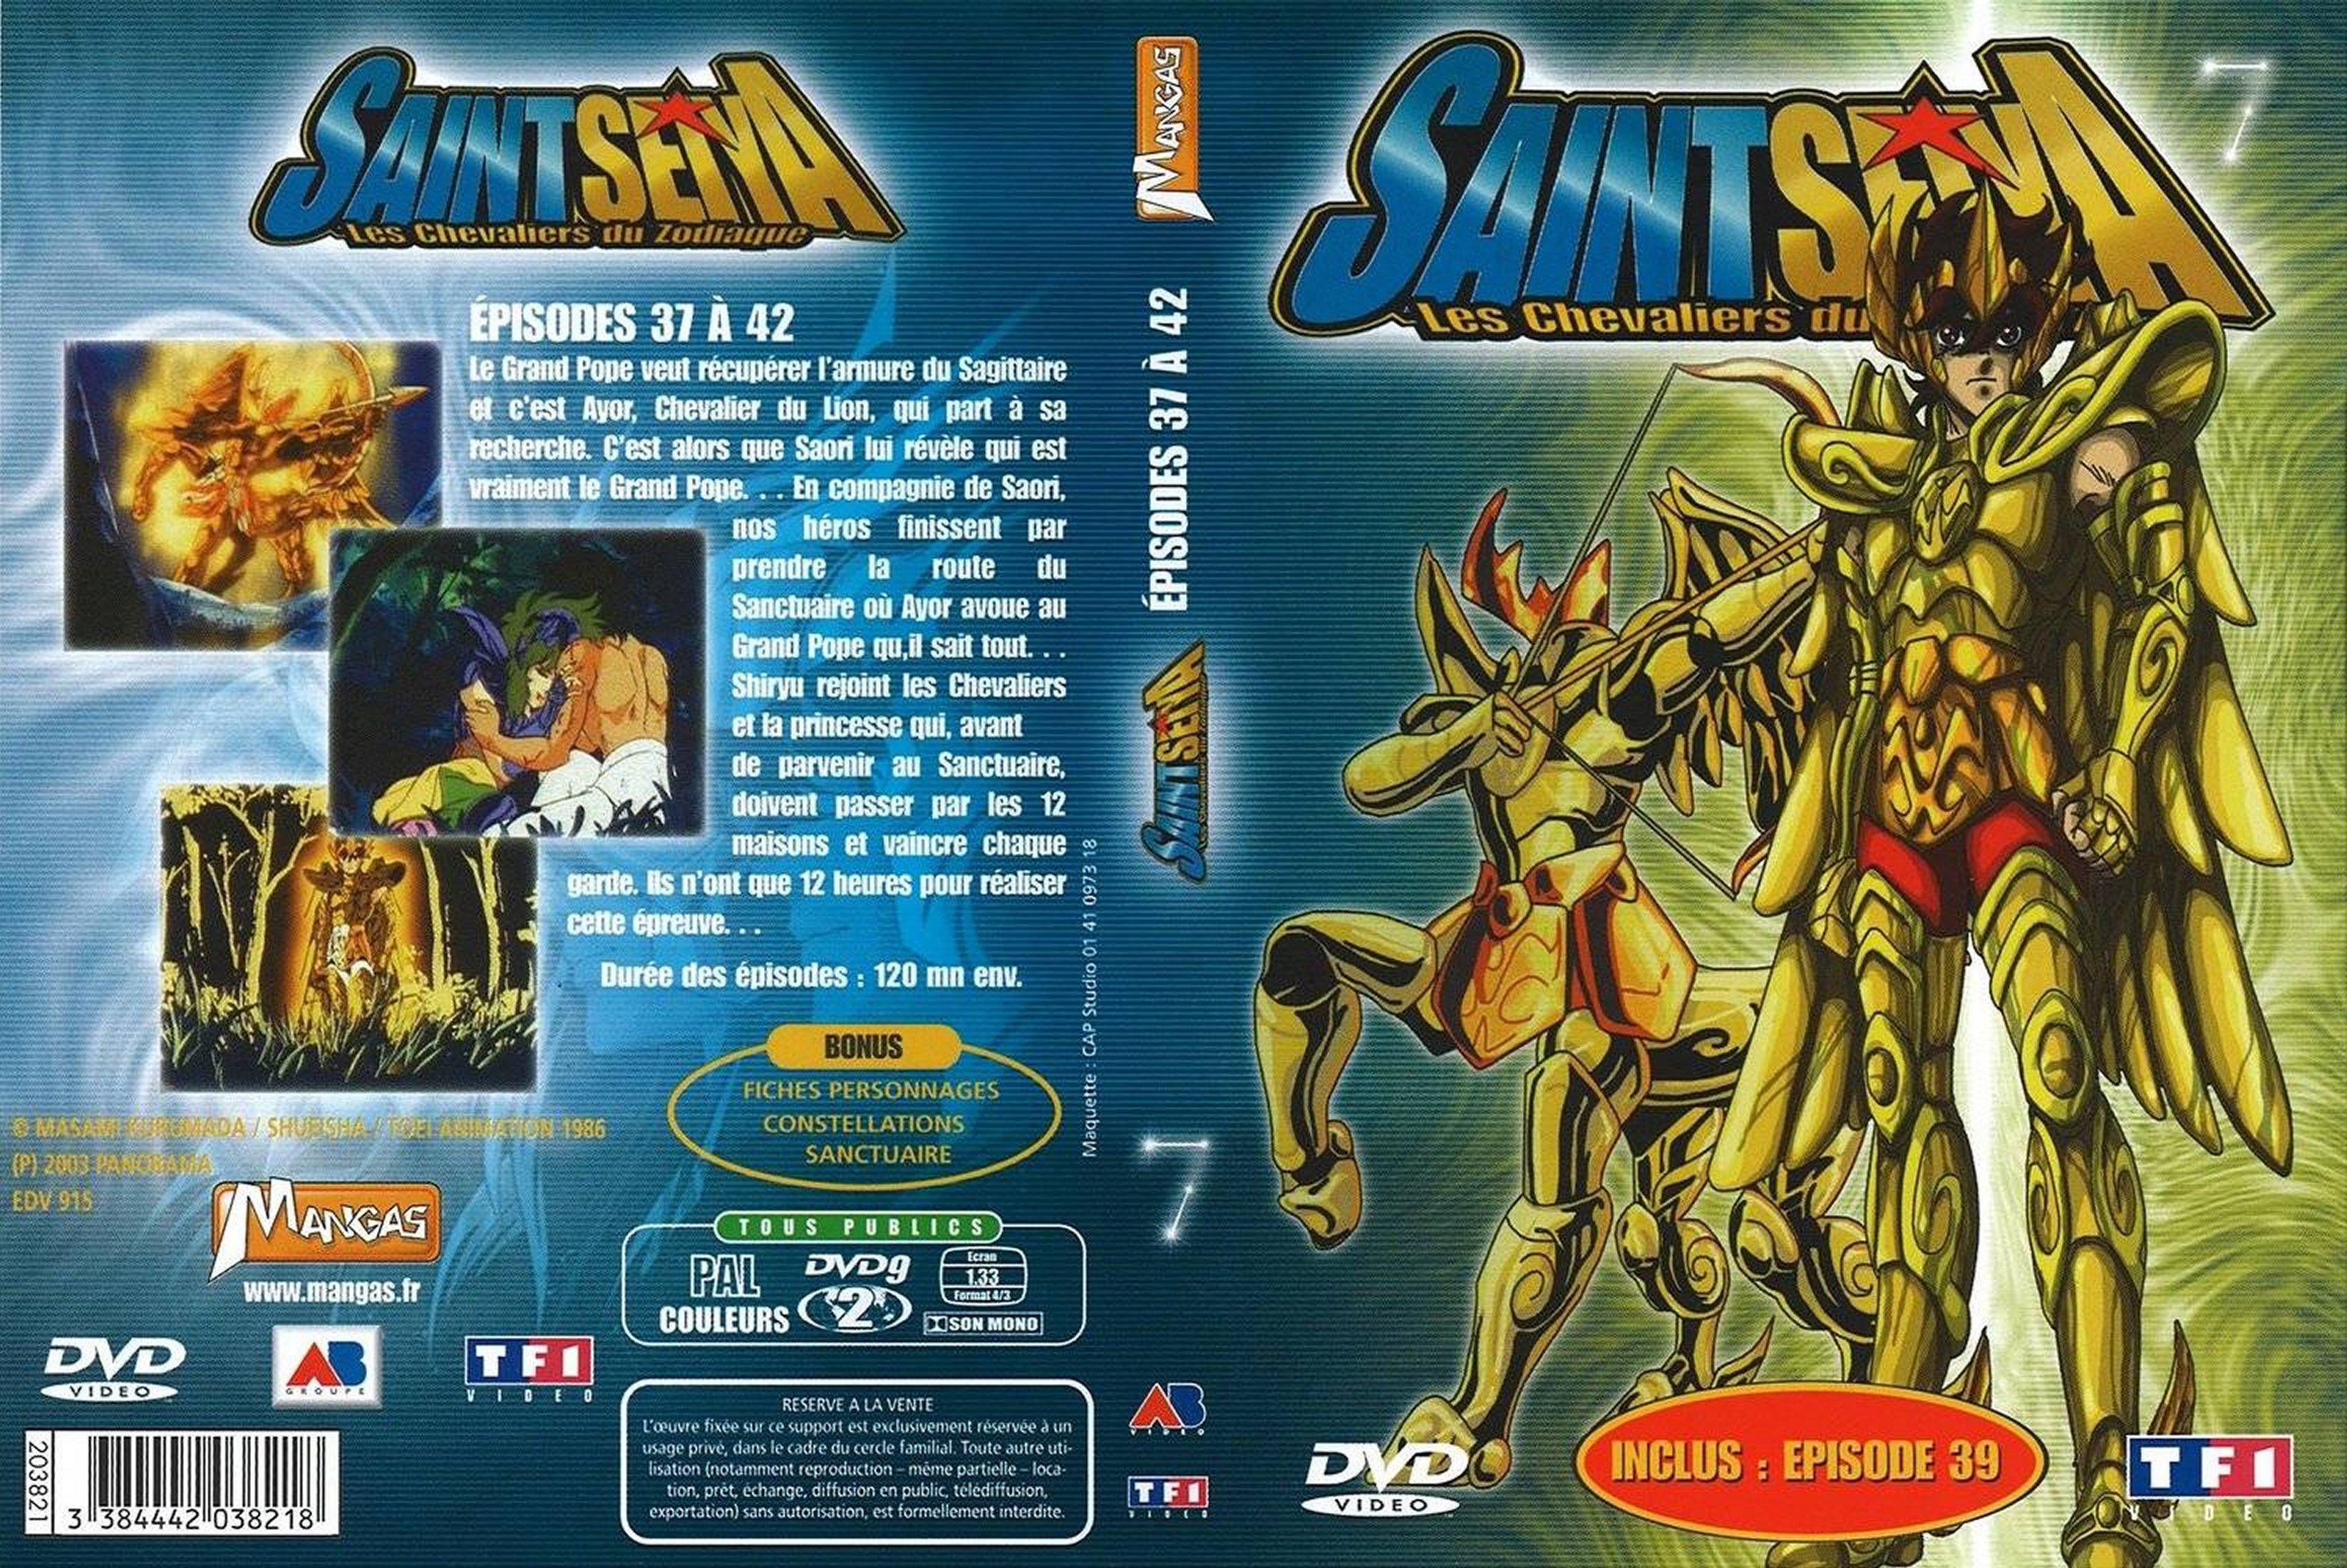 Jaquette DVD Saint Seiya vol 07